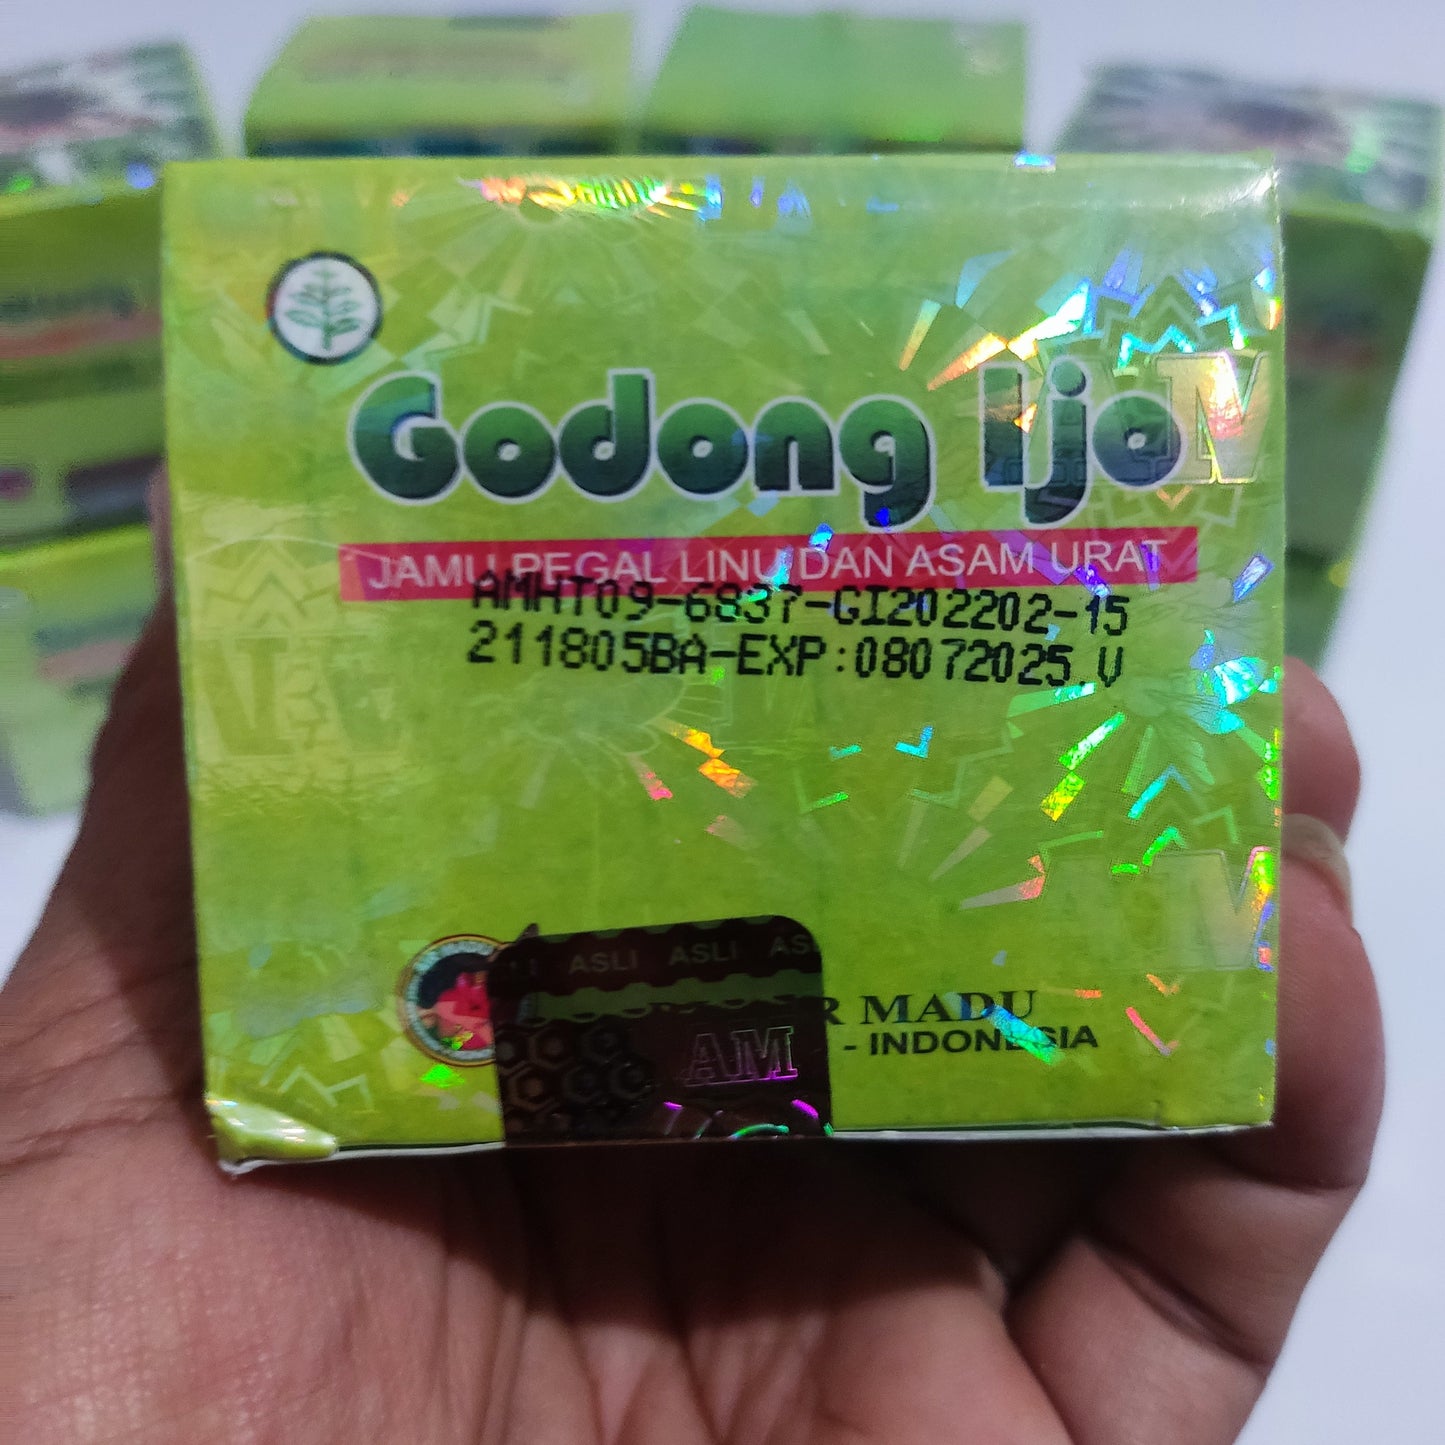 Godong Ijo Original Herbal Capsules For Gout, Chronic Rheumatism, And Cholesterol